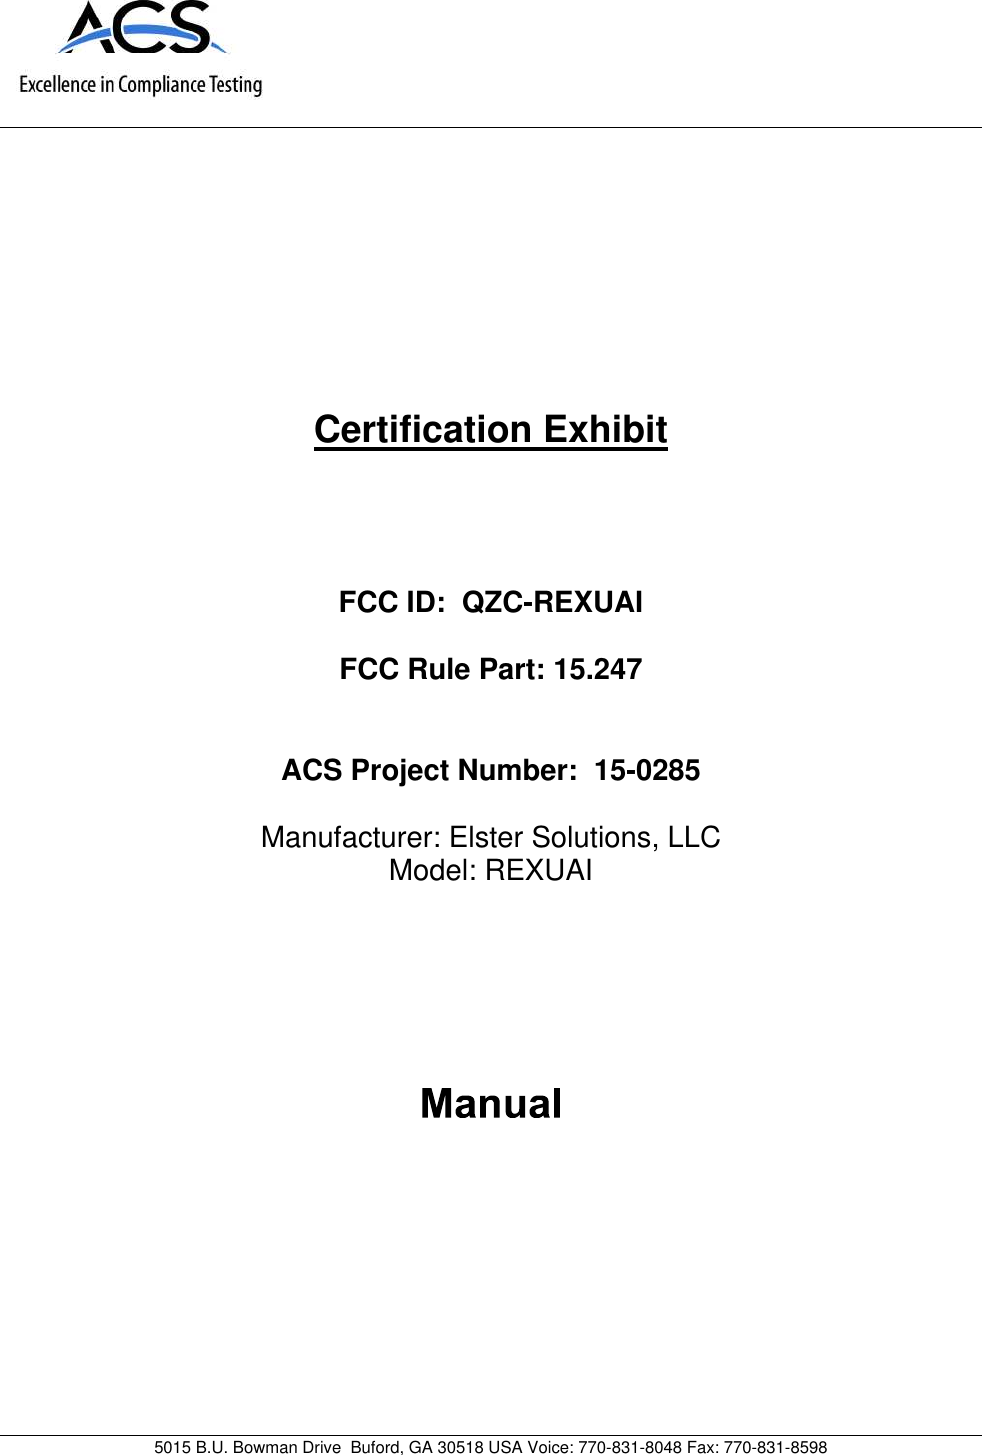 5015 B.U. Bowman Drive Buford, GA 30518 USA Voice: 770-831-8048 Fax: 770-831-8598Certification ExhibitFCC ID: QZC-REXUAIFCC Rule Part: 15.247ACS Project Number: 15-0285Manufacturer: Elster Solutions, LLCModel: REXUAI